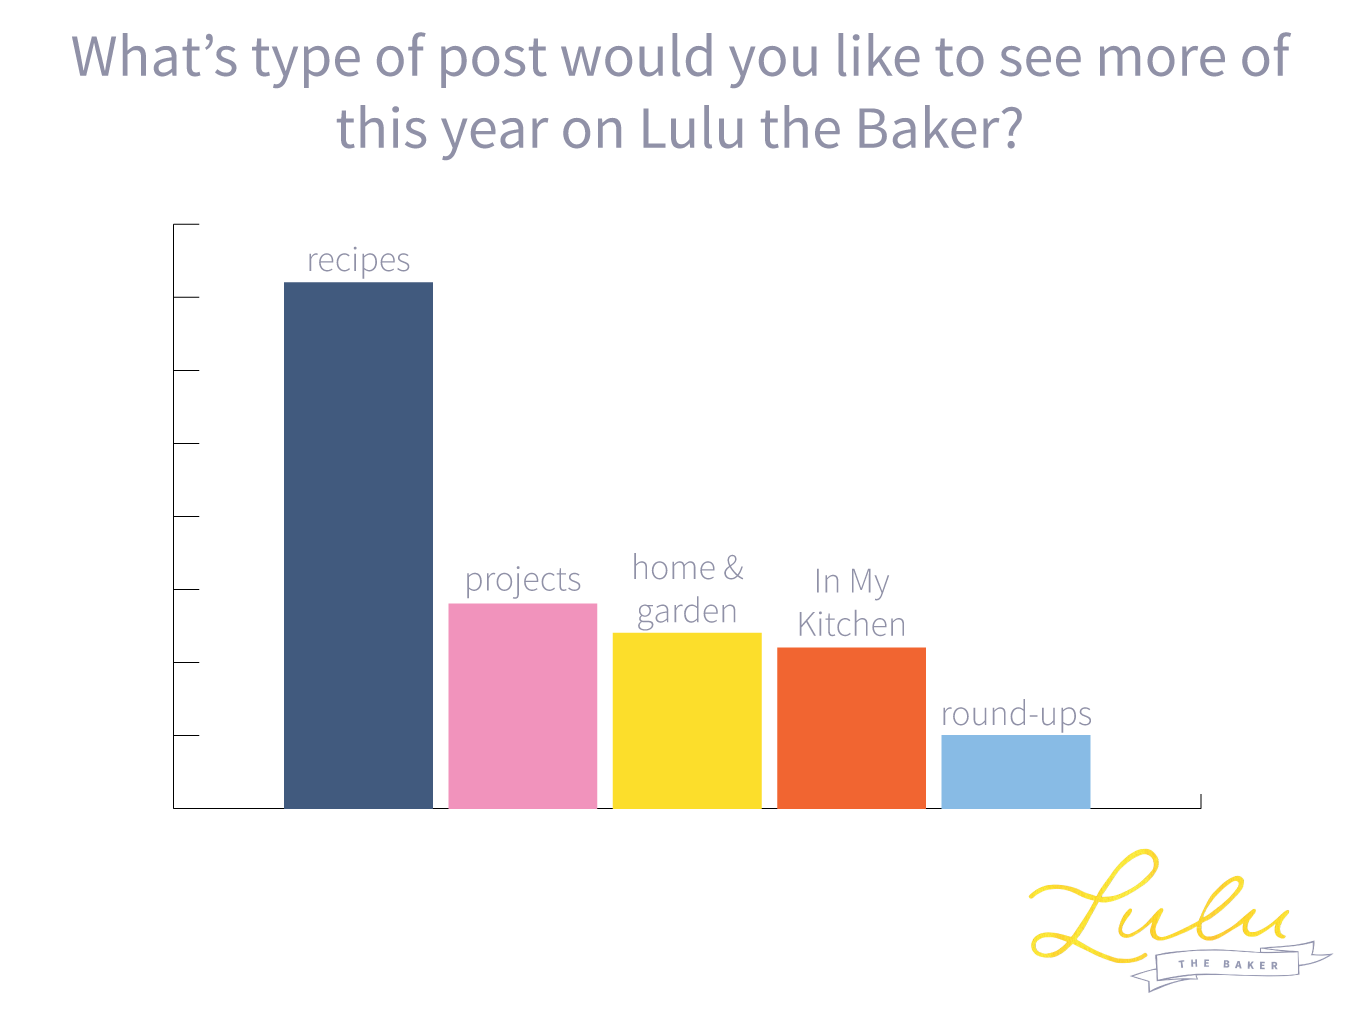 lulu the baker reader survey results